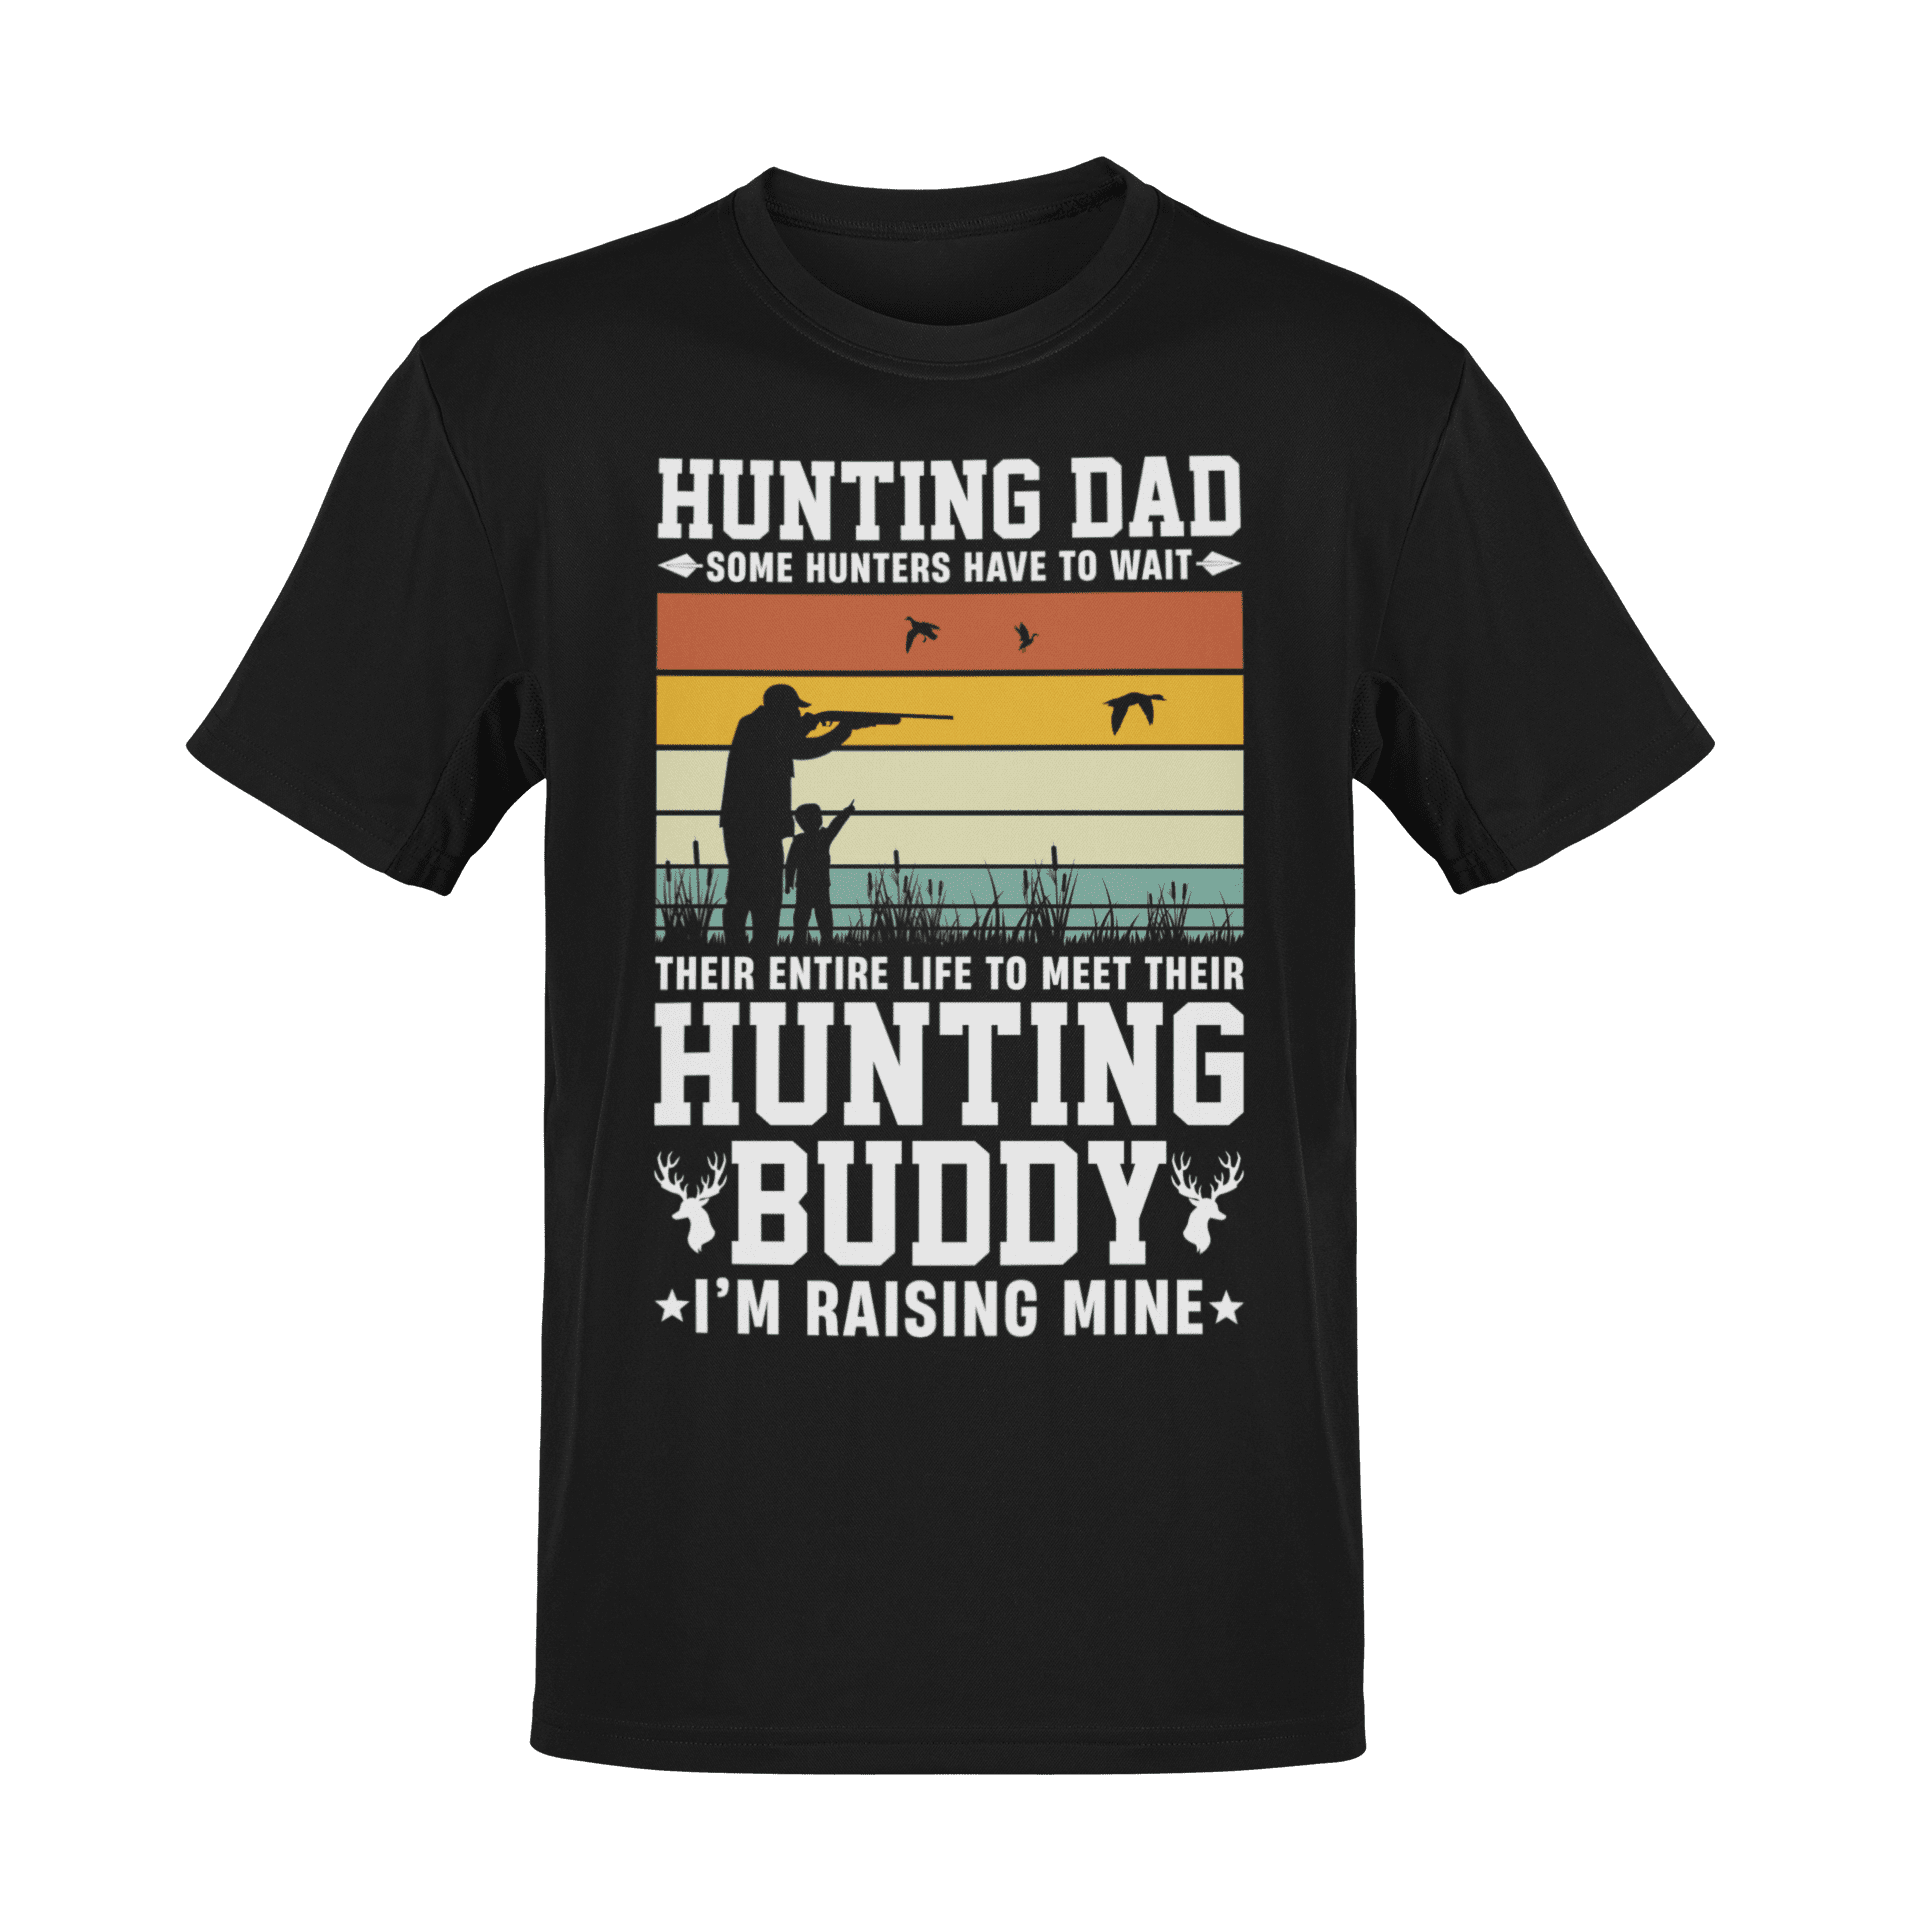 Hunting dad